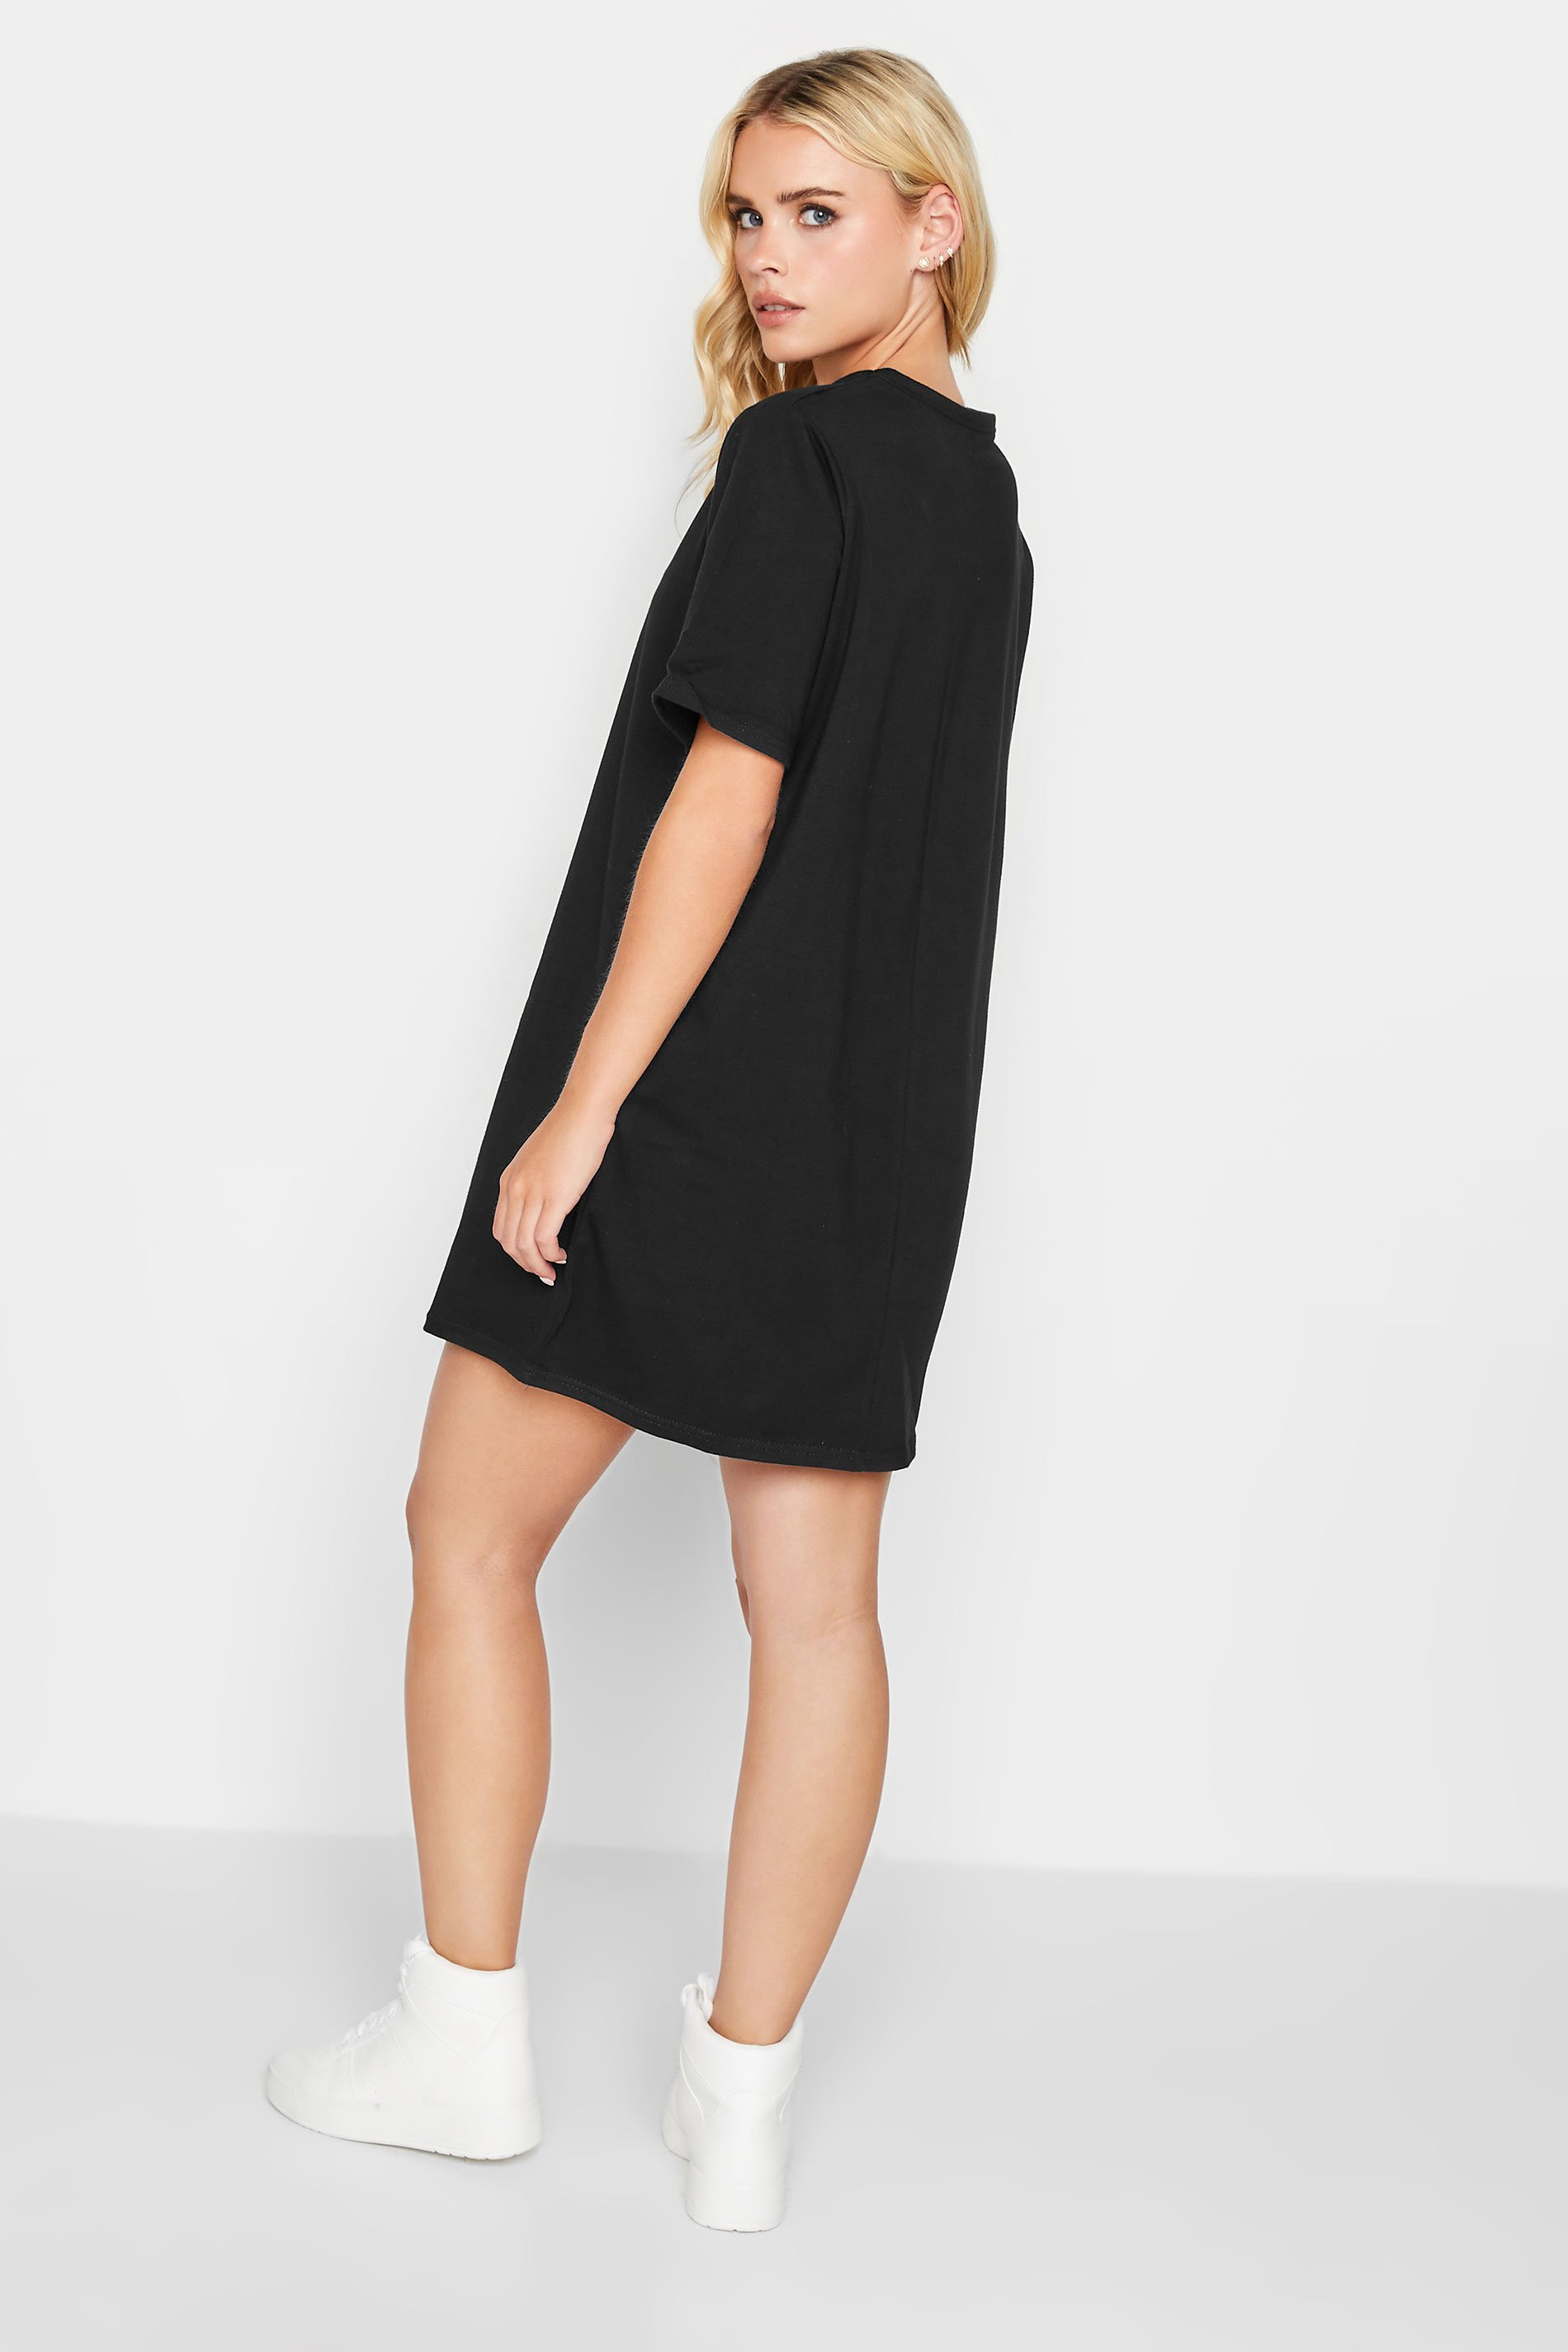 Petite Black Oversized T-Shirt Dress | PixieGirl  3